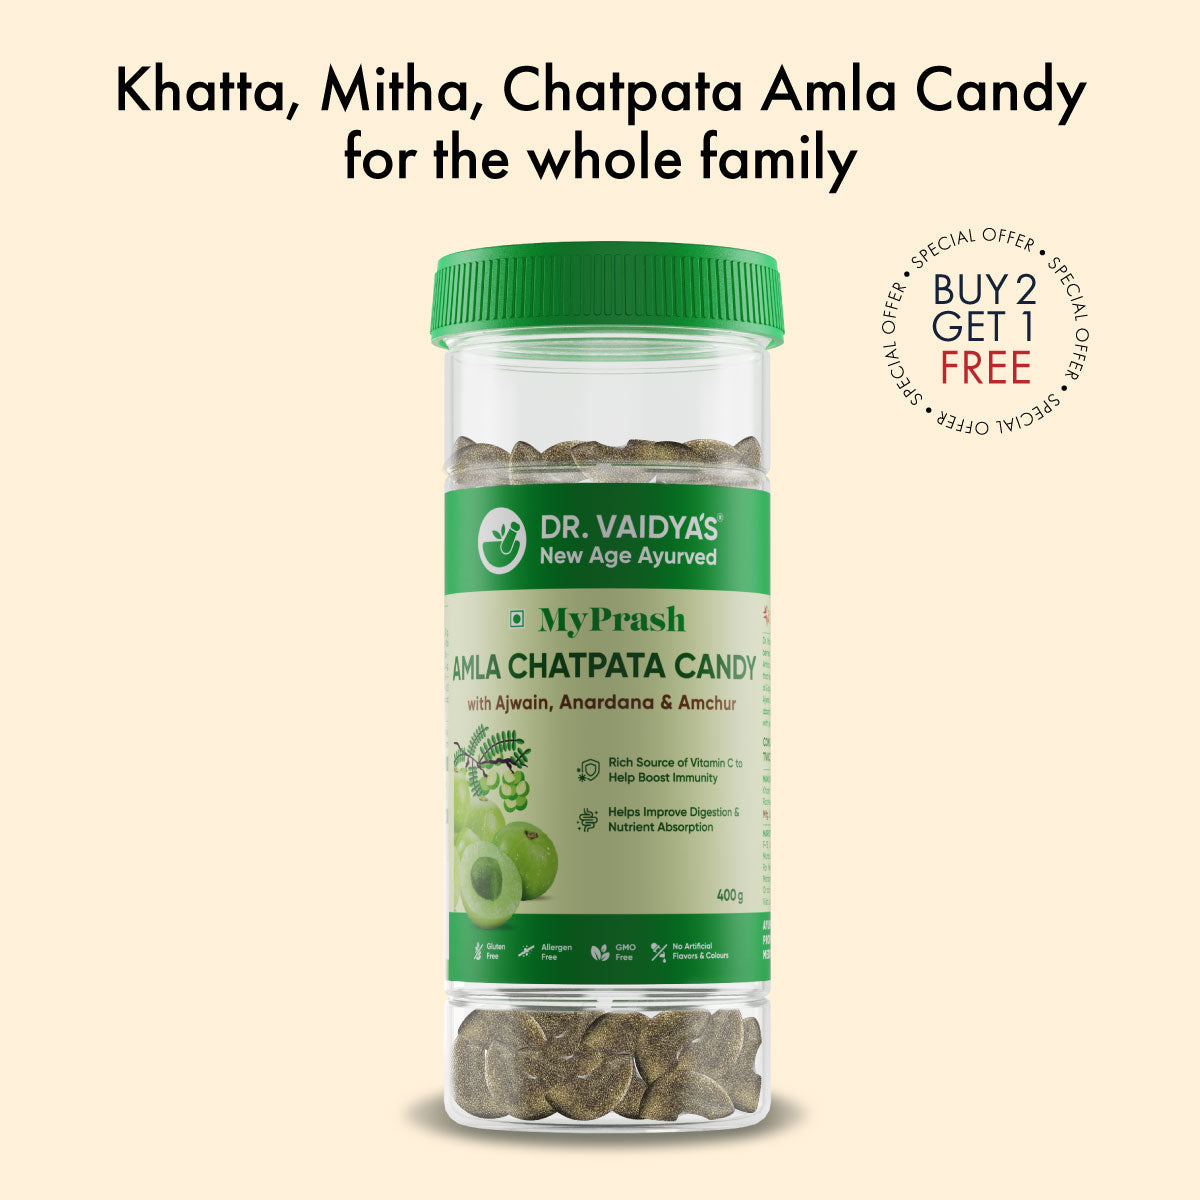 MyPrash Amla Chatpata Candy: Amla Candy That Helps Boost Immunity & Energy Levels  (Buy 2 Get 1 FREE)